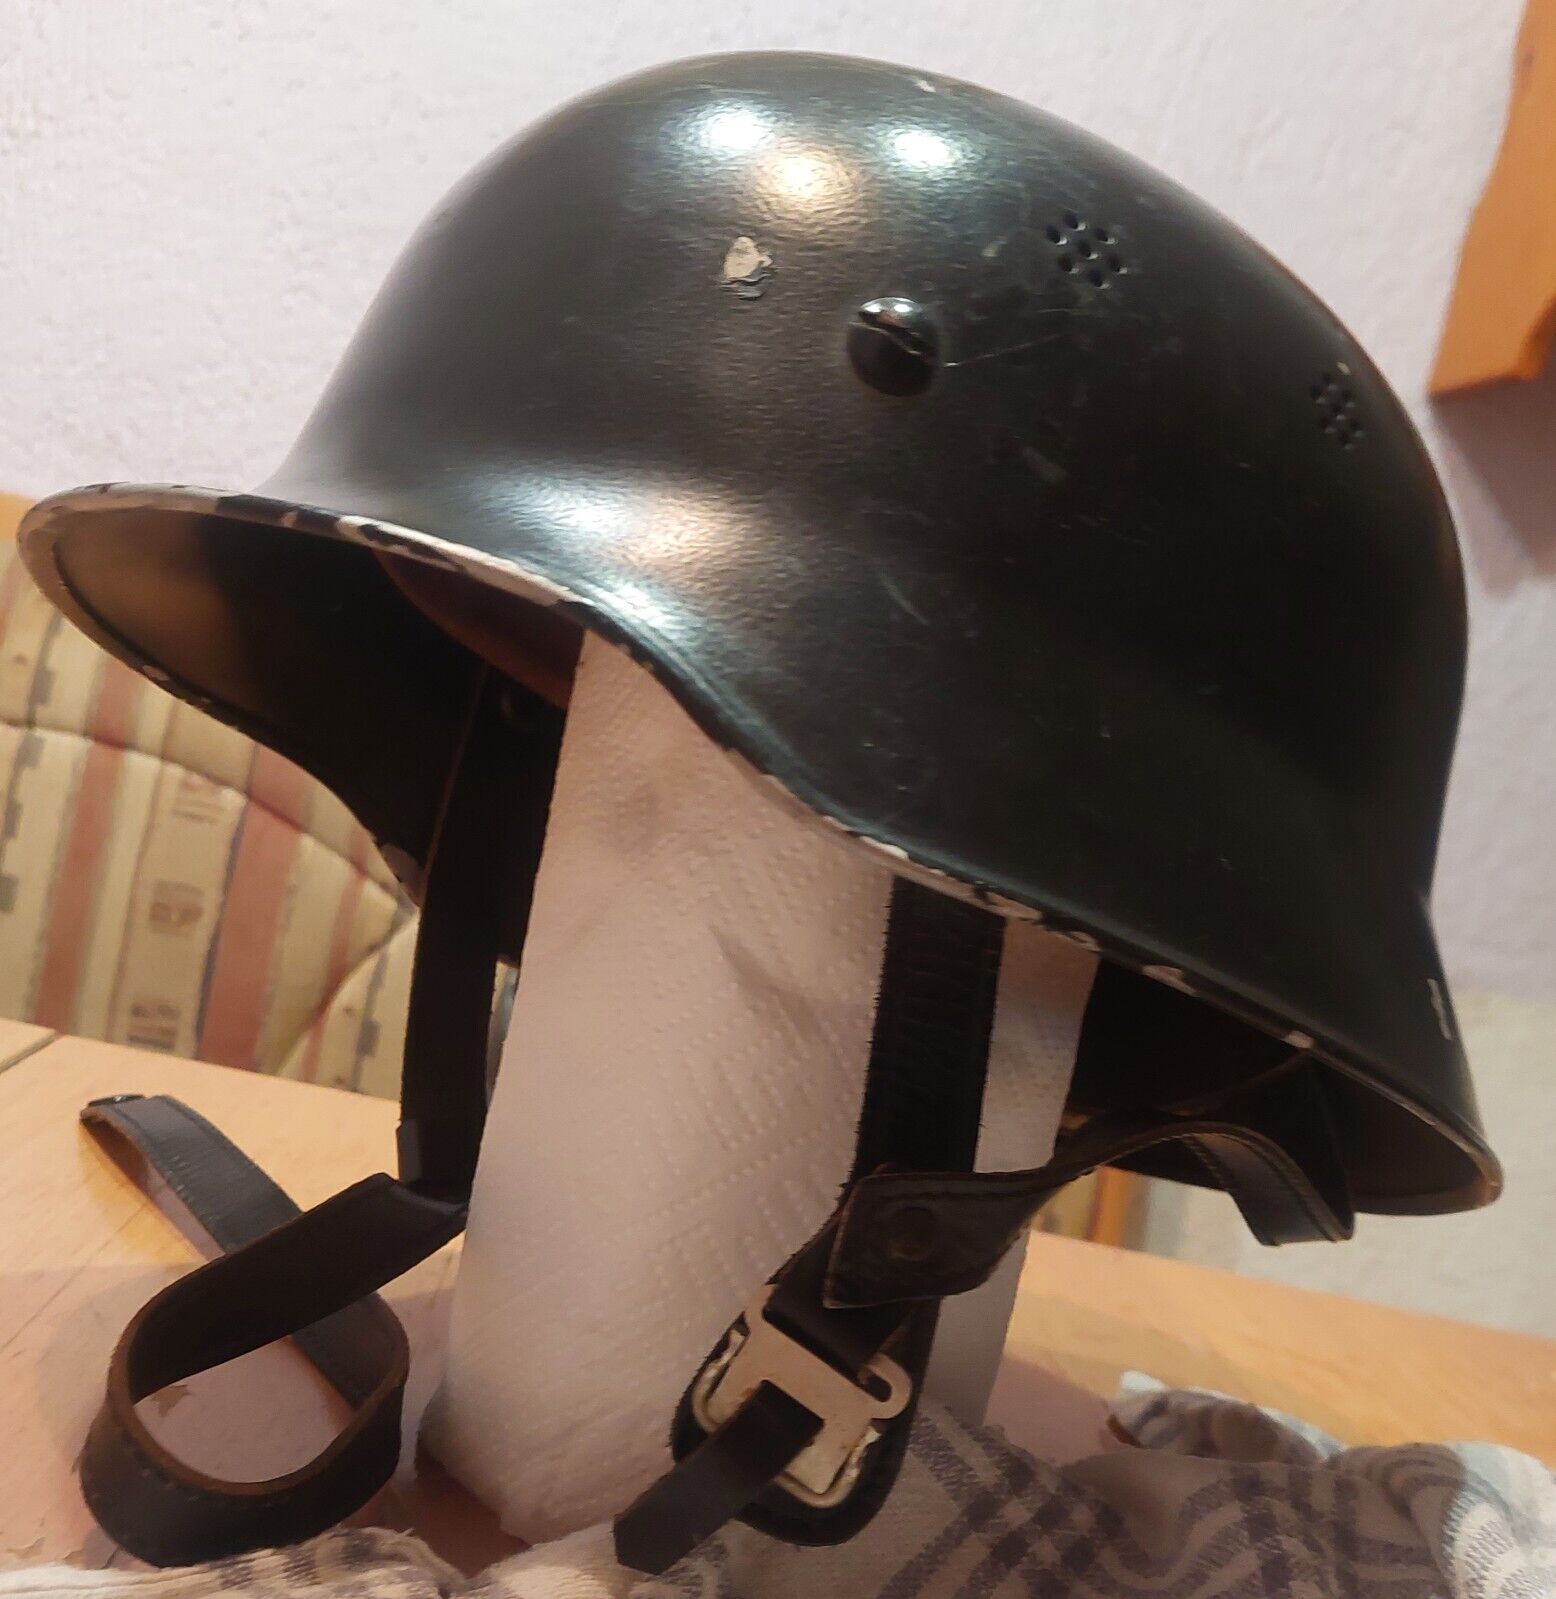 Original WW2  German Helm from the period